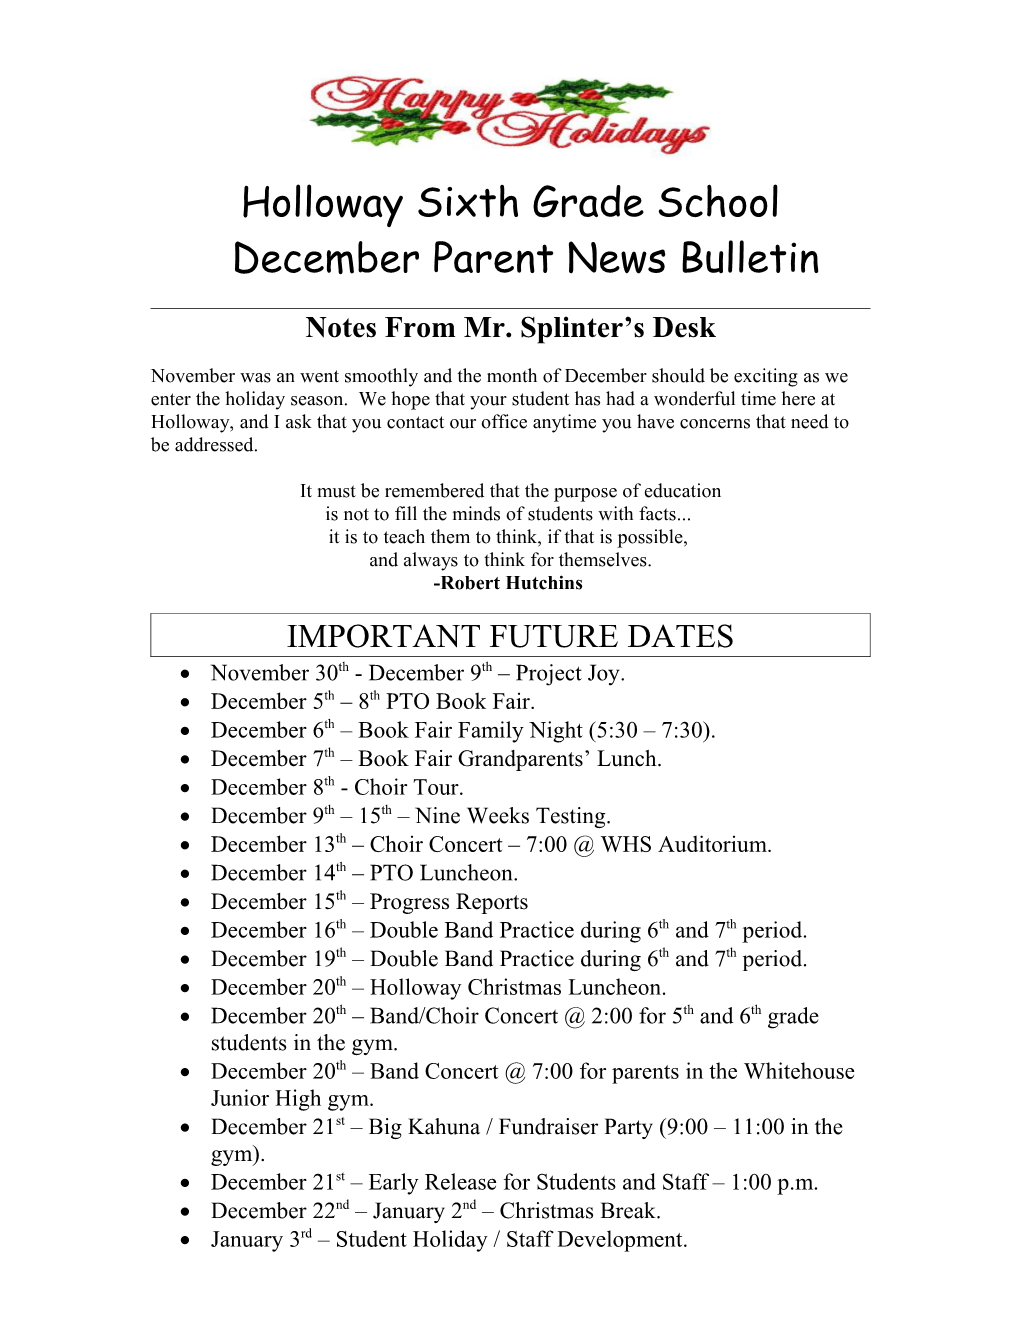 Holloway Sixth Grade School s2